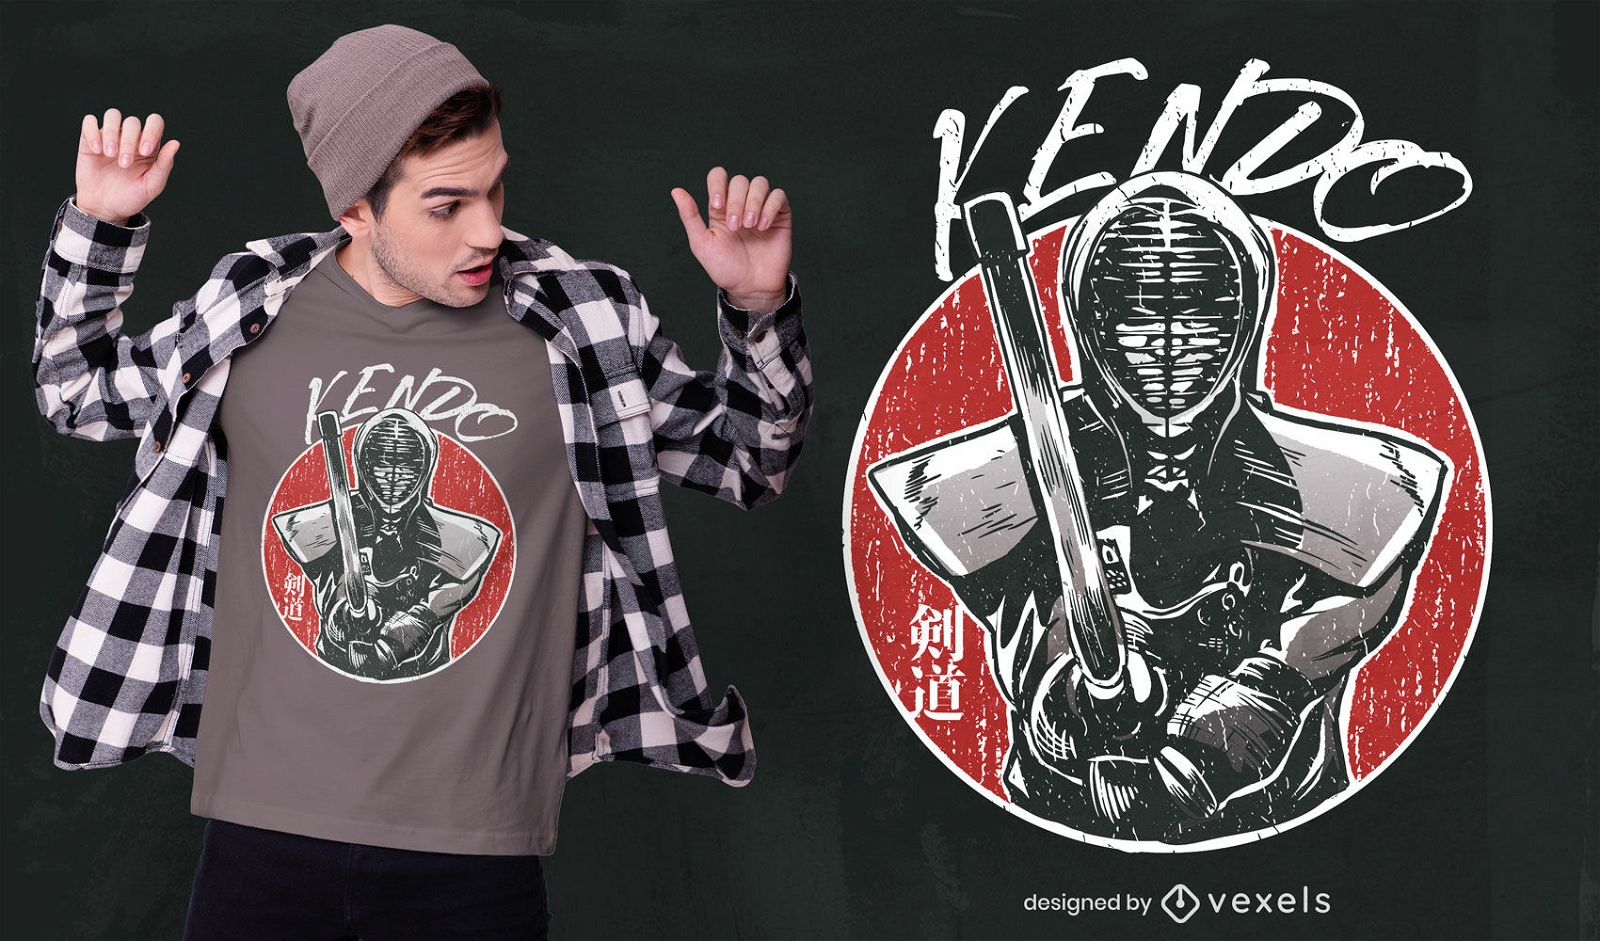 Kendo fighter textured t-shirt design